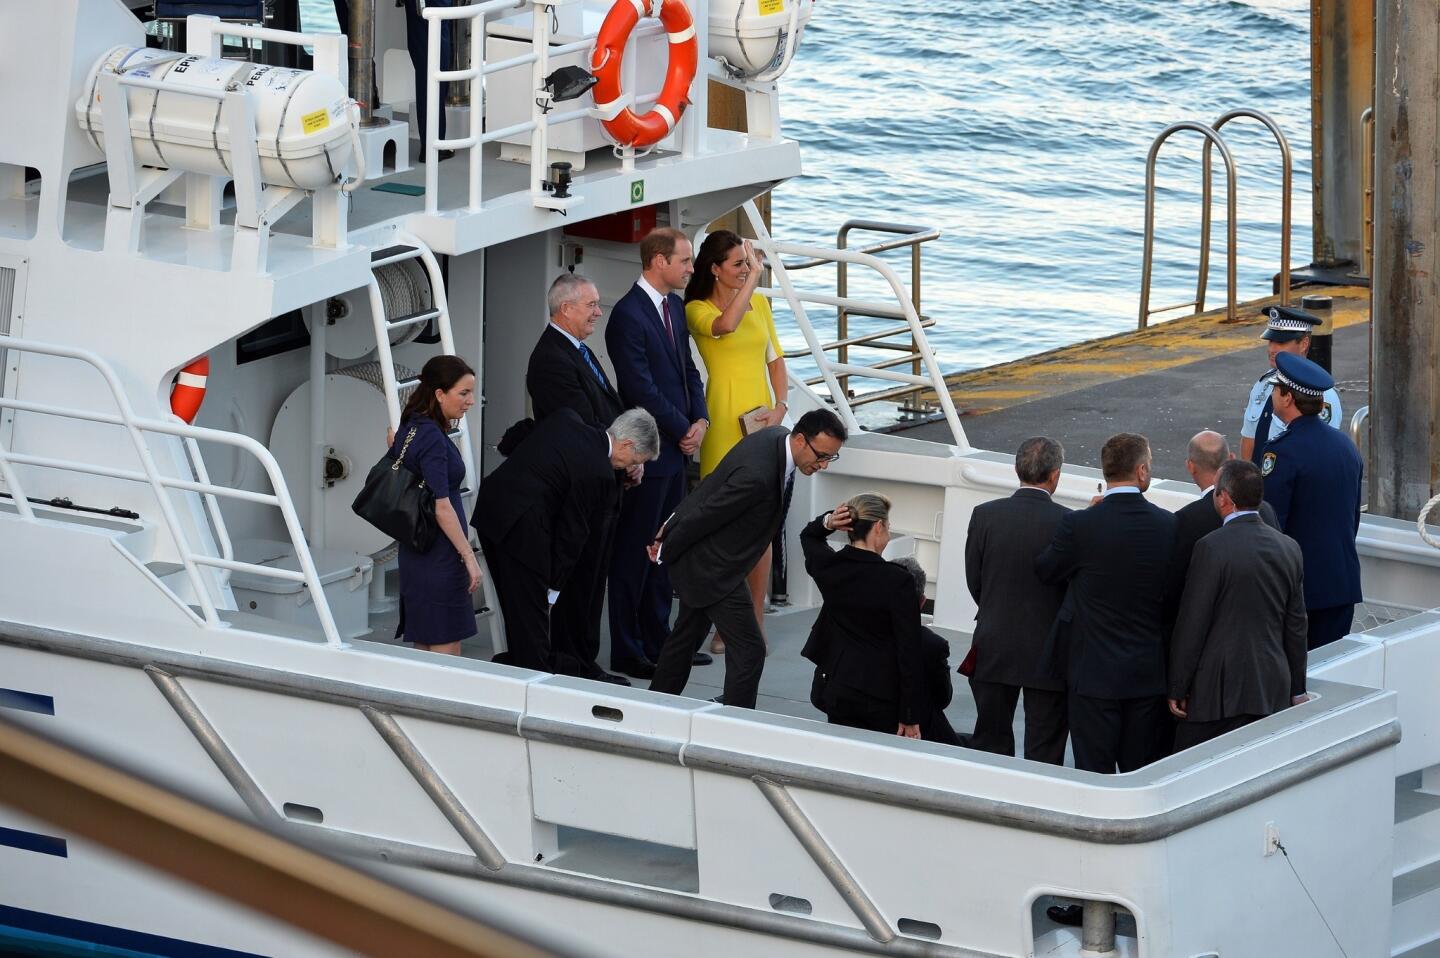 Royal visit to New Zealand and Australia